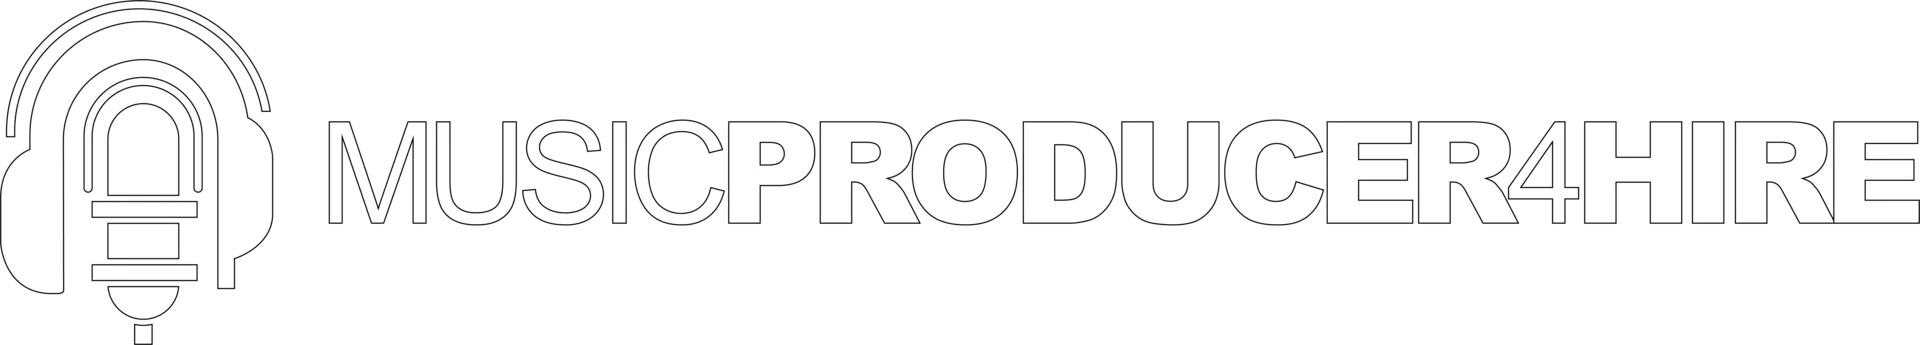 Music Producer 4 hire logo